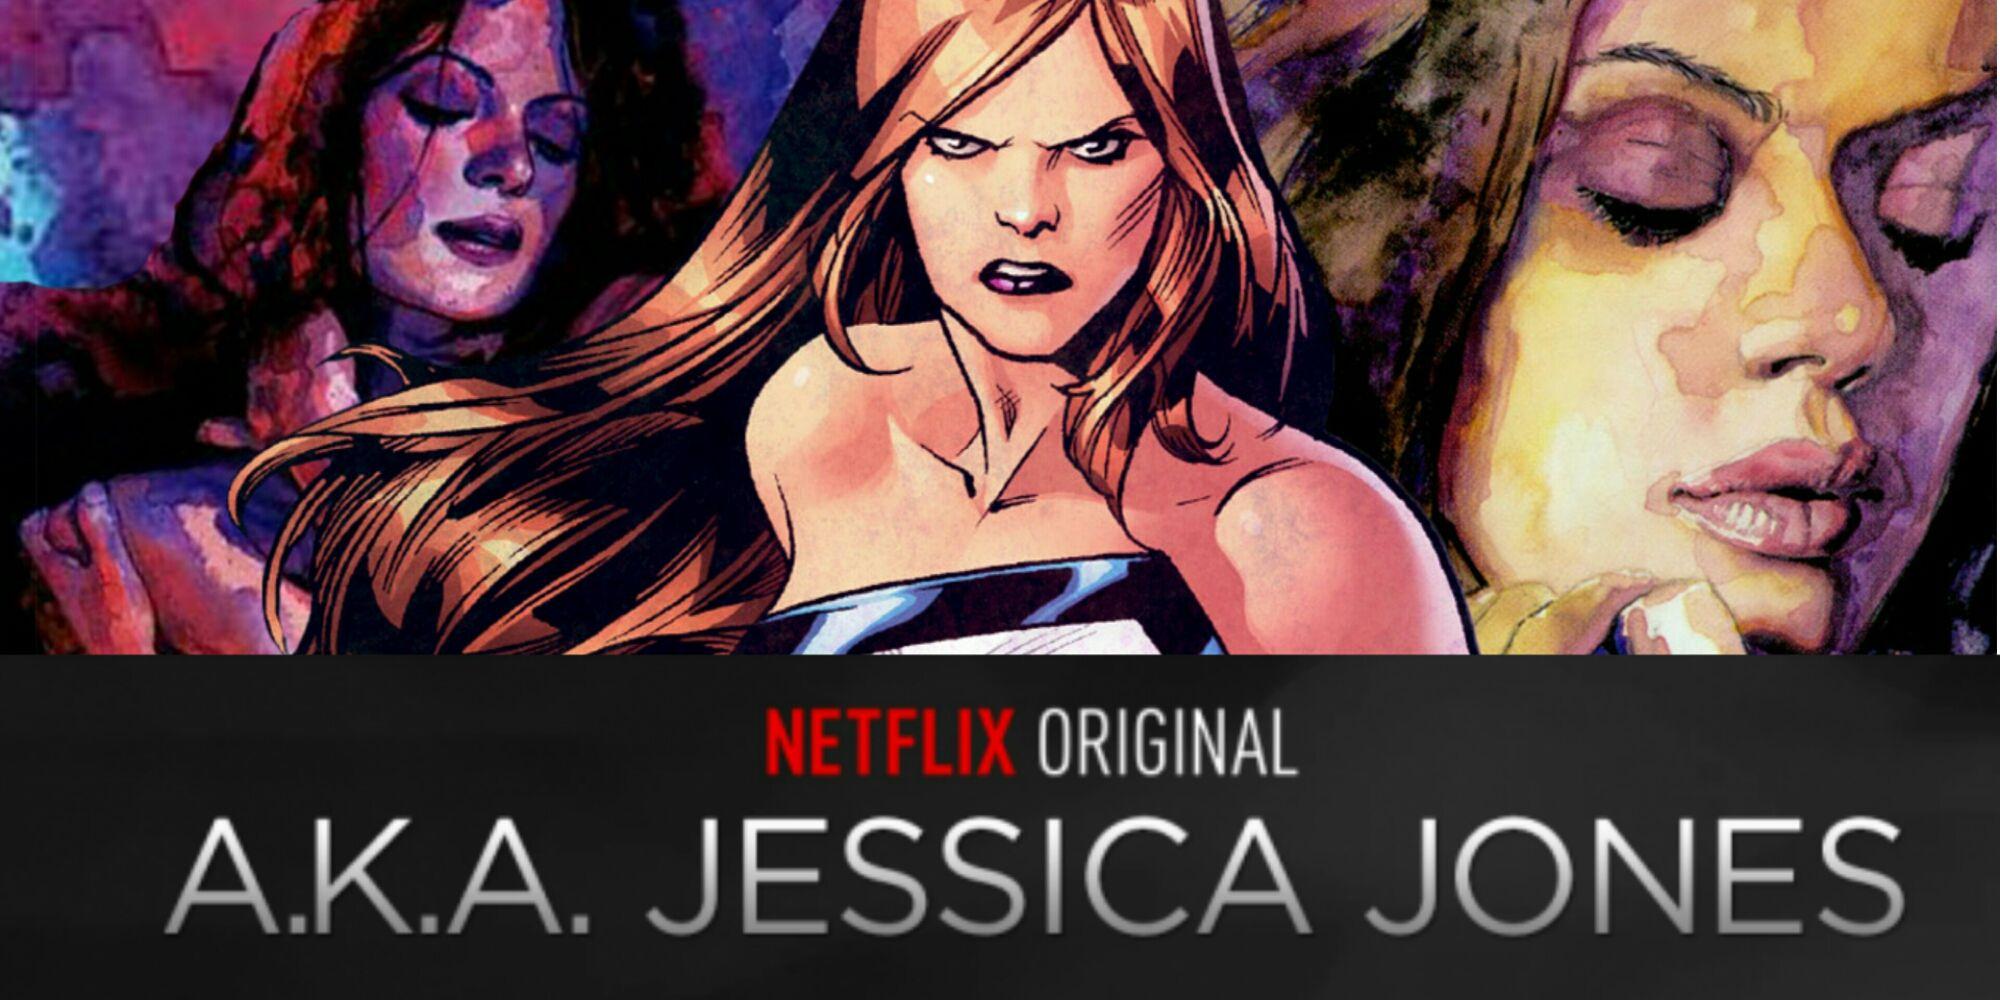 Jessica Jones TV HD wallpaper free download